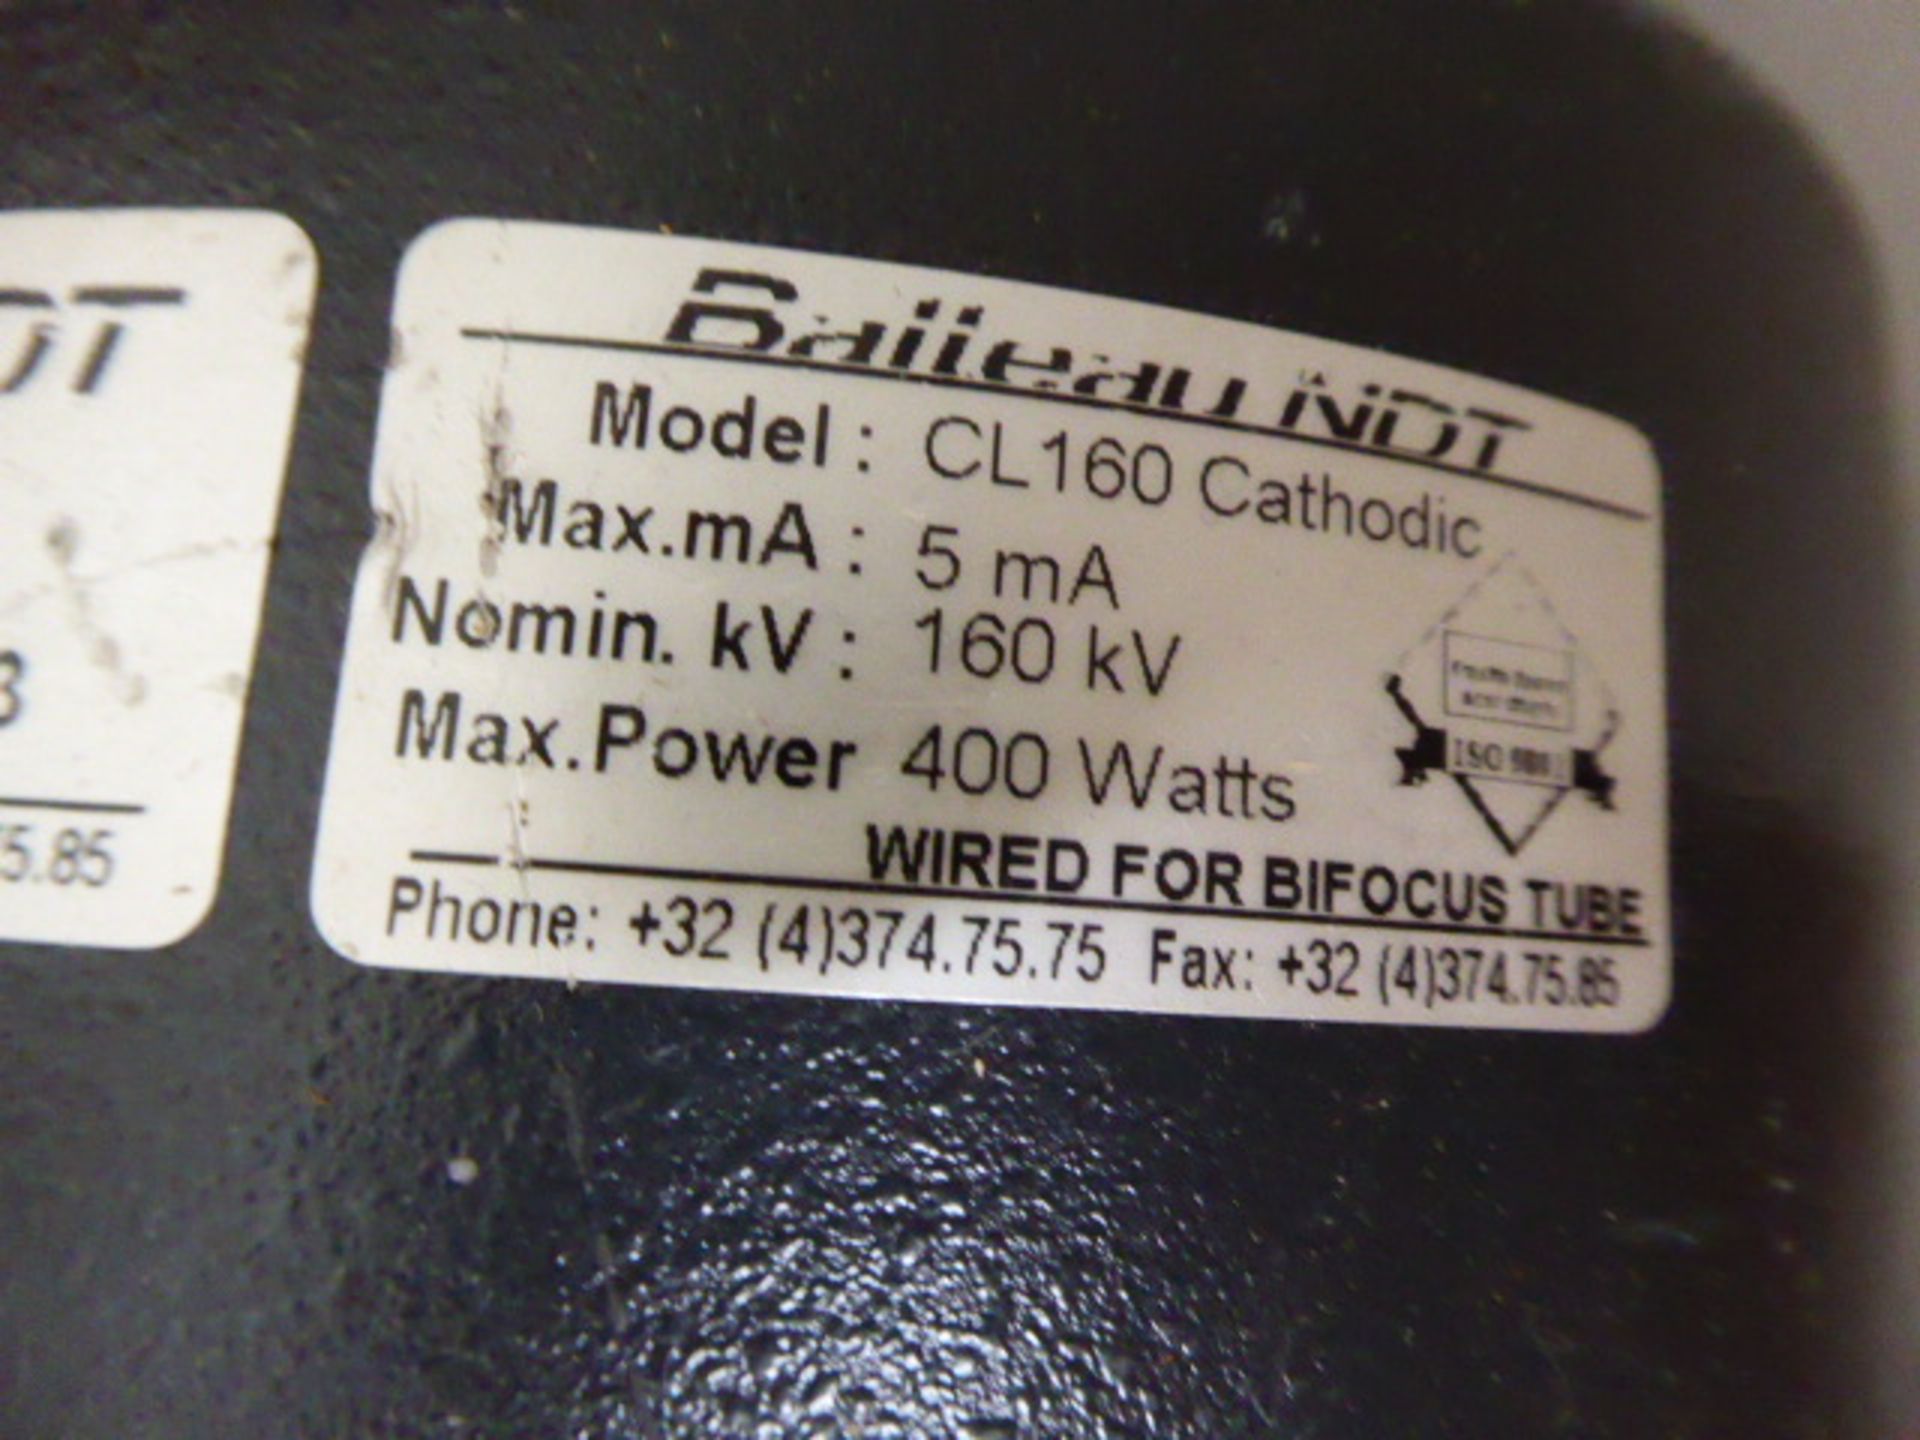 Balteau graphic generator 160KV cathodic industrial X-Ray generator max power 400 watt wired for - Image 6 of 12